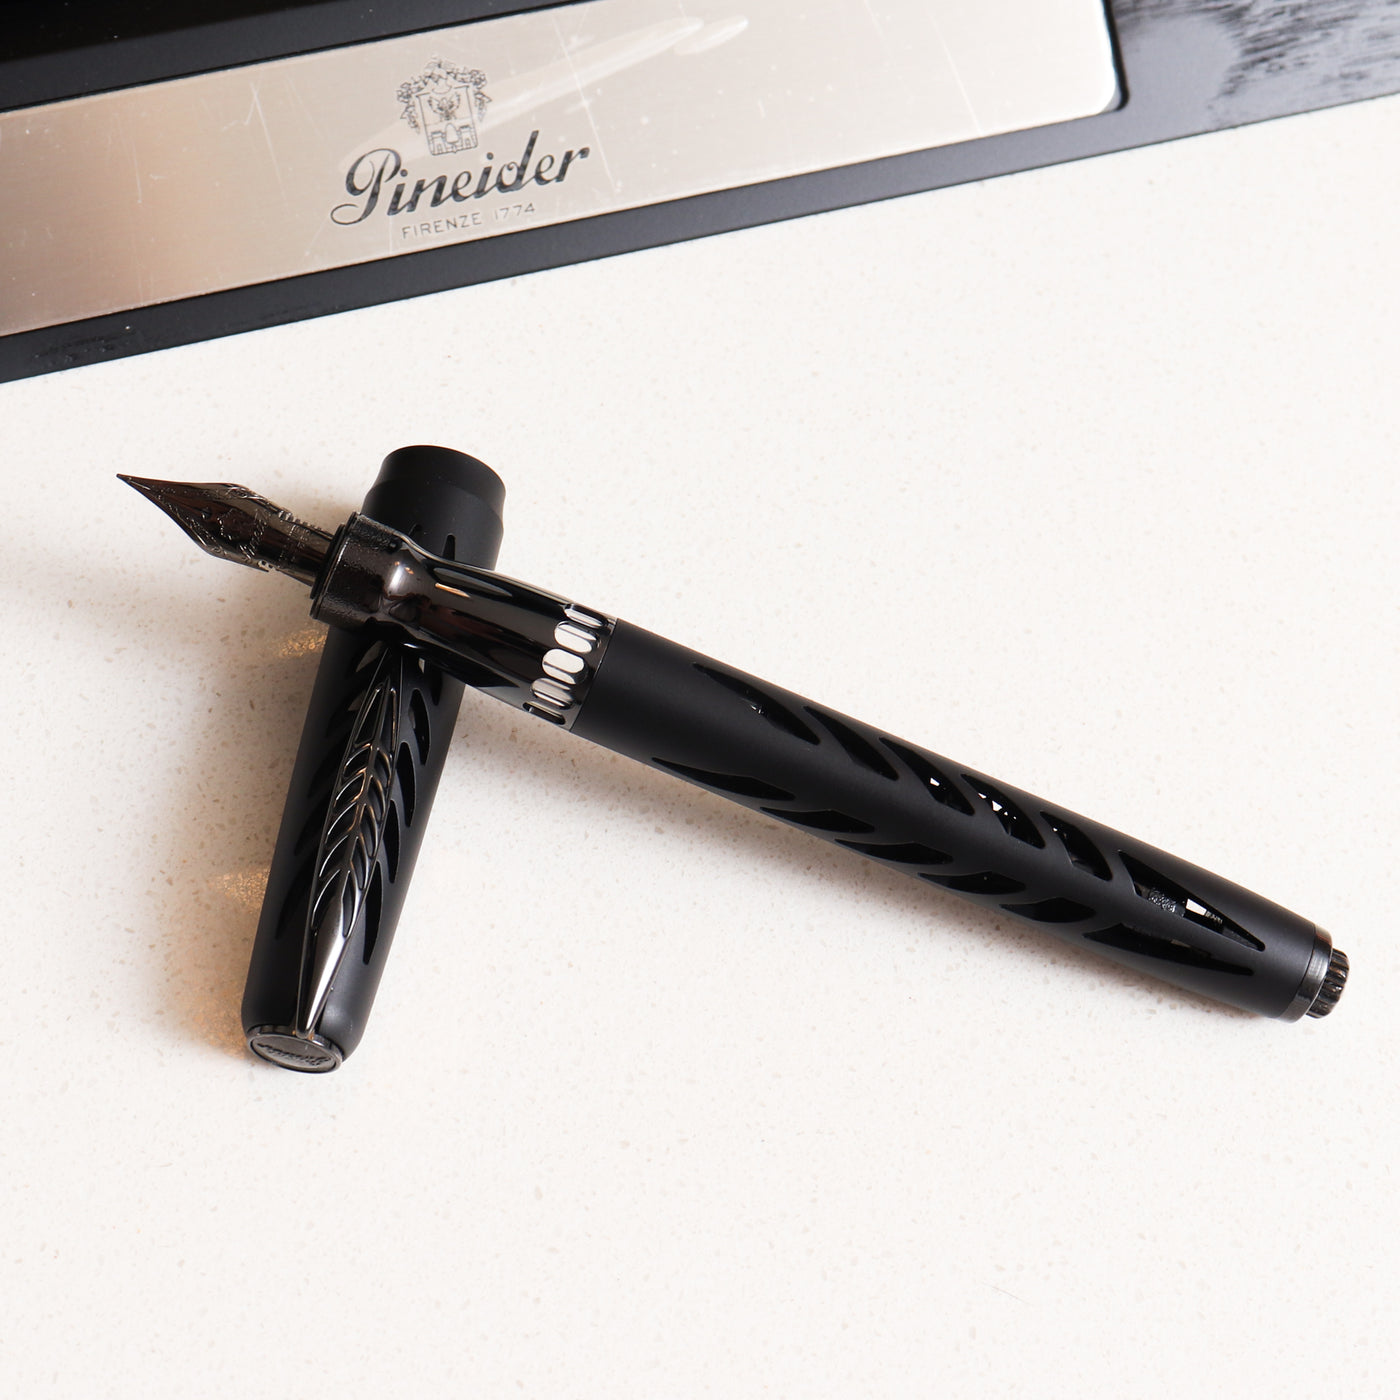 Pineider Arman Black Aluminum Limited Edition Fountain Pen